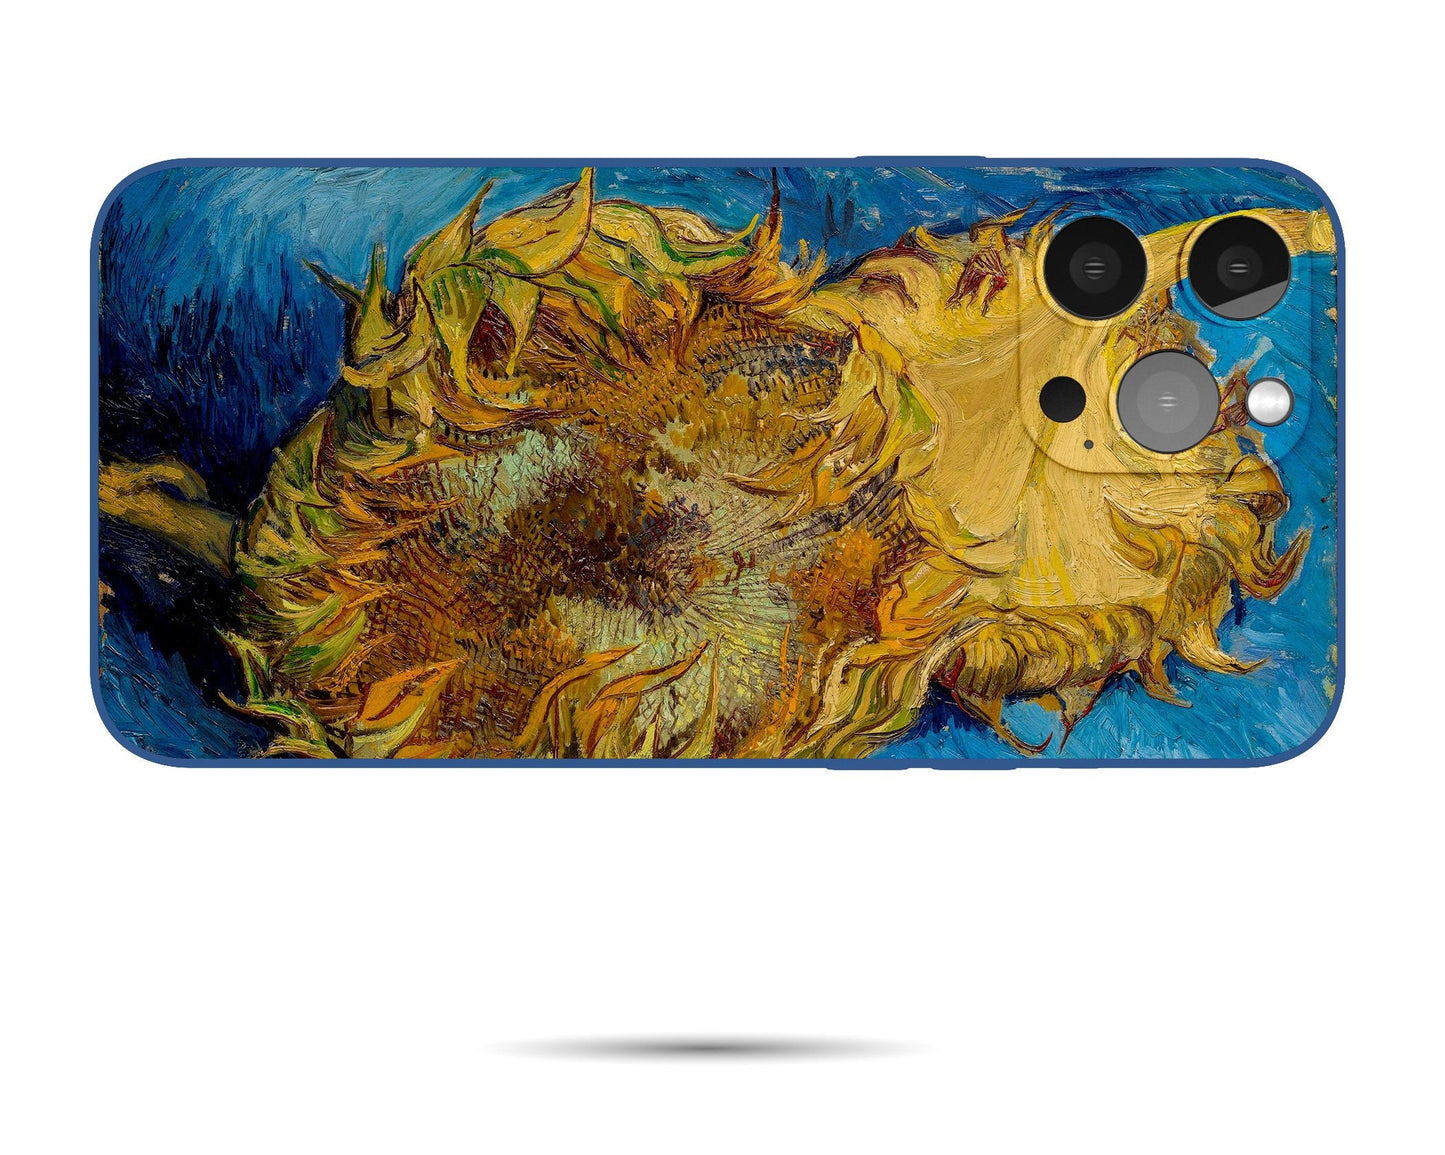 Vincent Van Gogh Sunflowers Phone Case, Iphone 8 Plus Case, Iphone Xs Max Case, Iphone 8 Plus Case Art, Protective Case, Iphone Case Matte